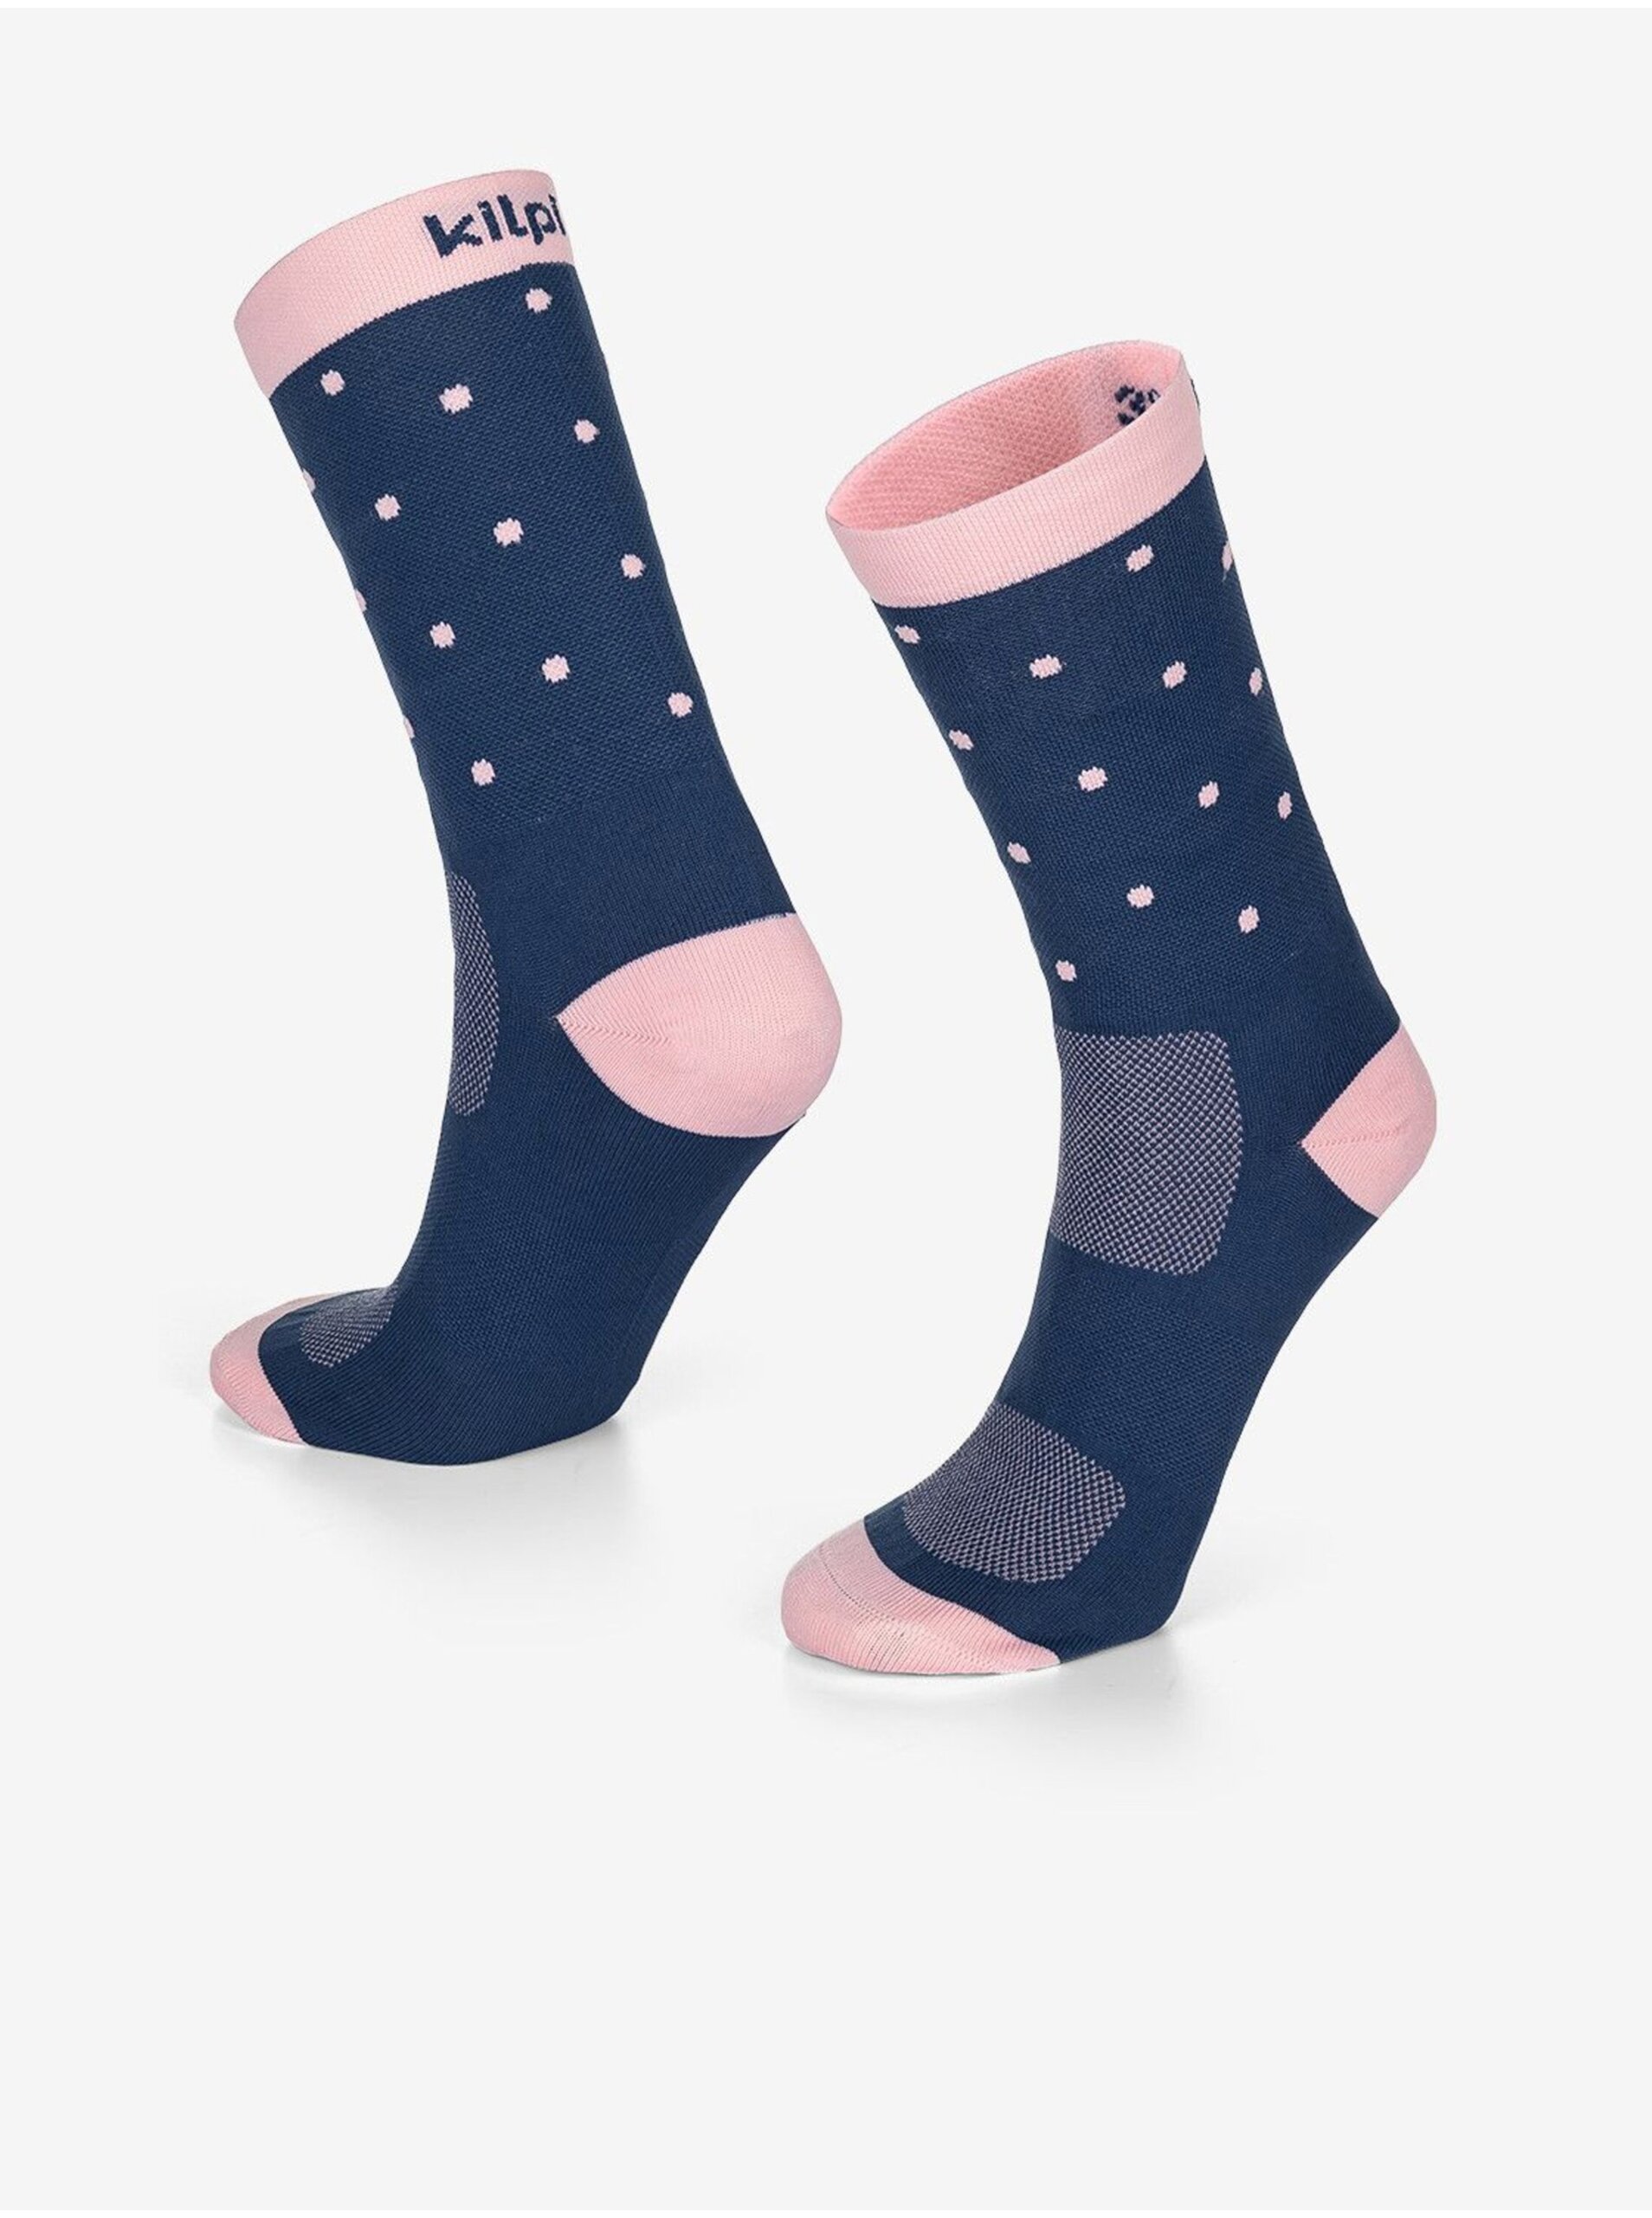 Lacno Ružovo-modré unisex bodkované ponožky Kilpi DOTS